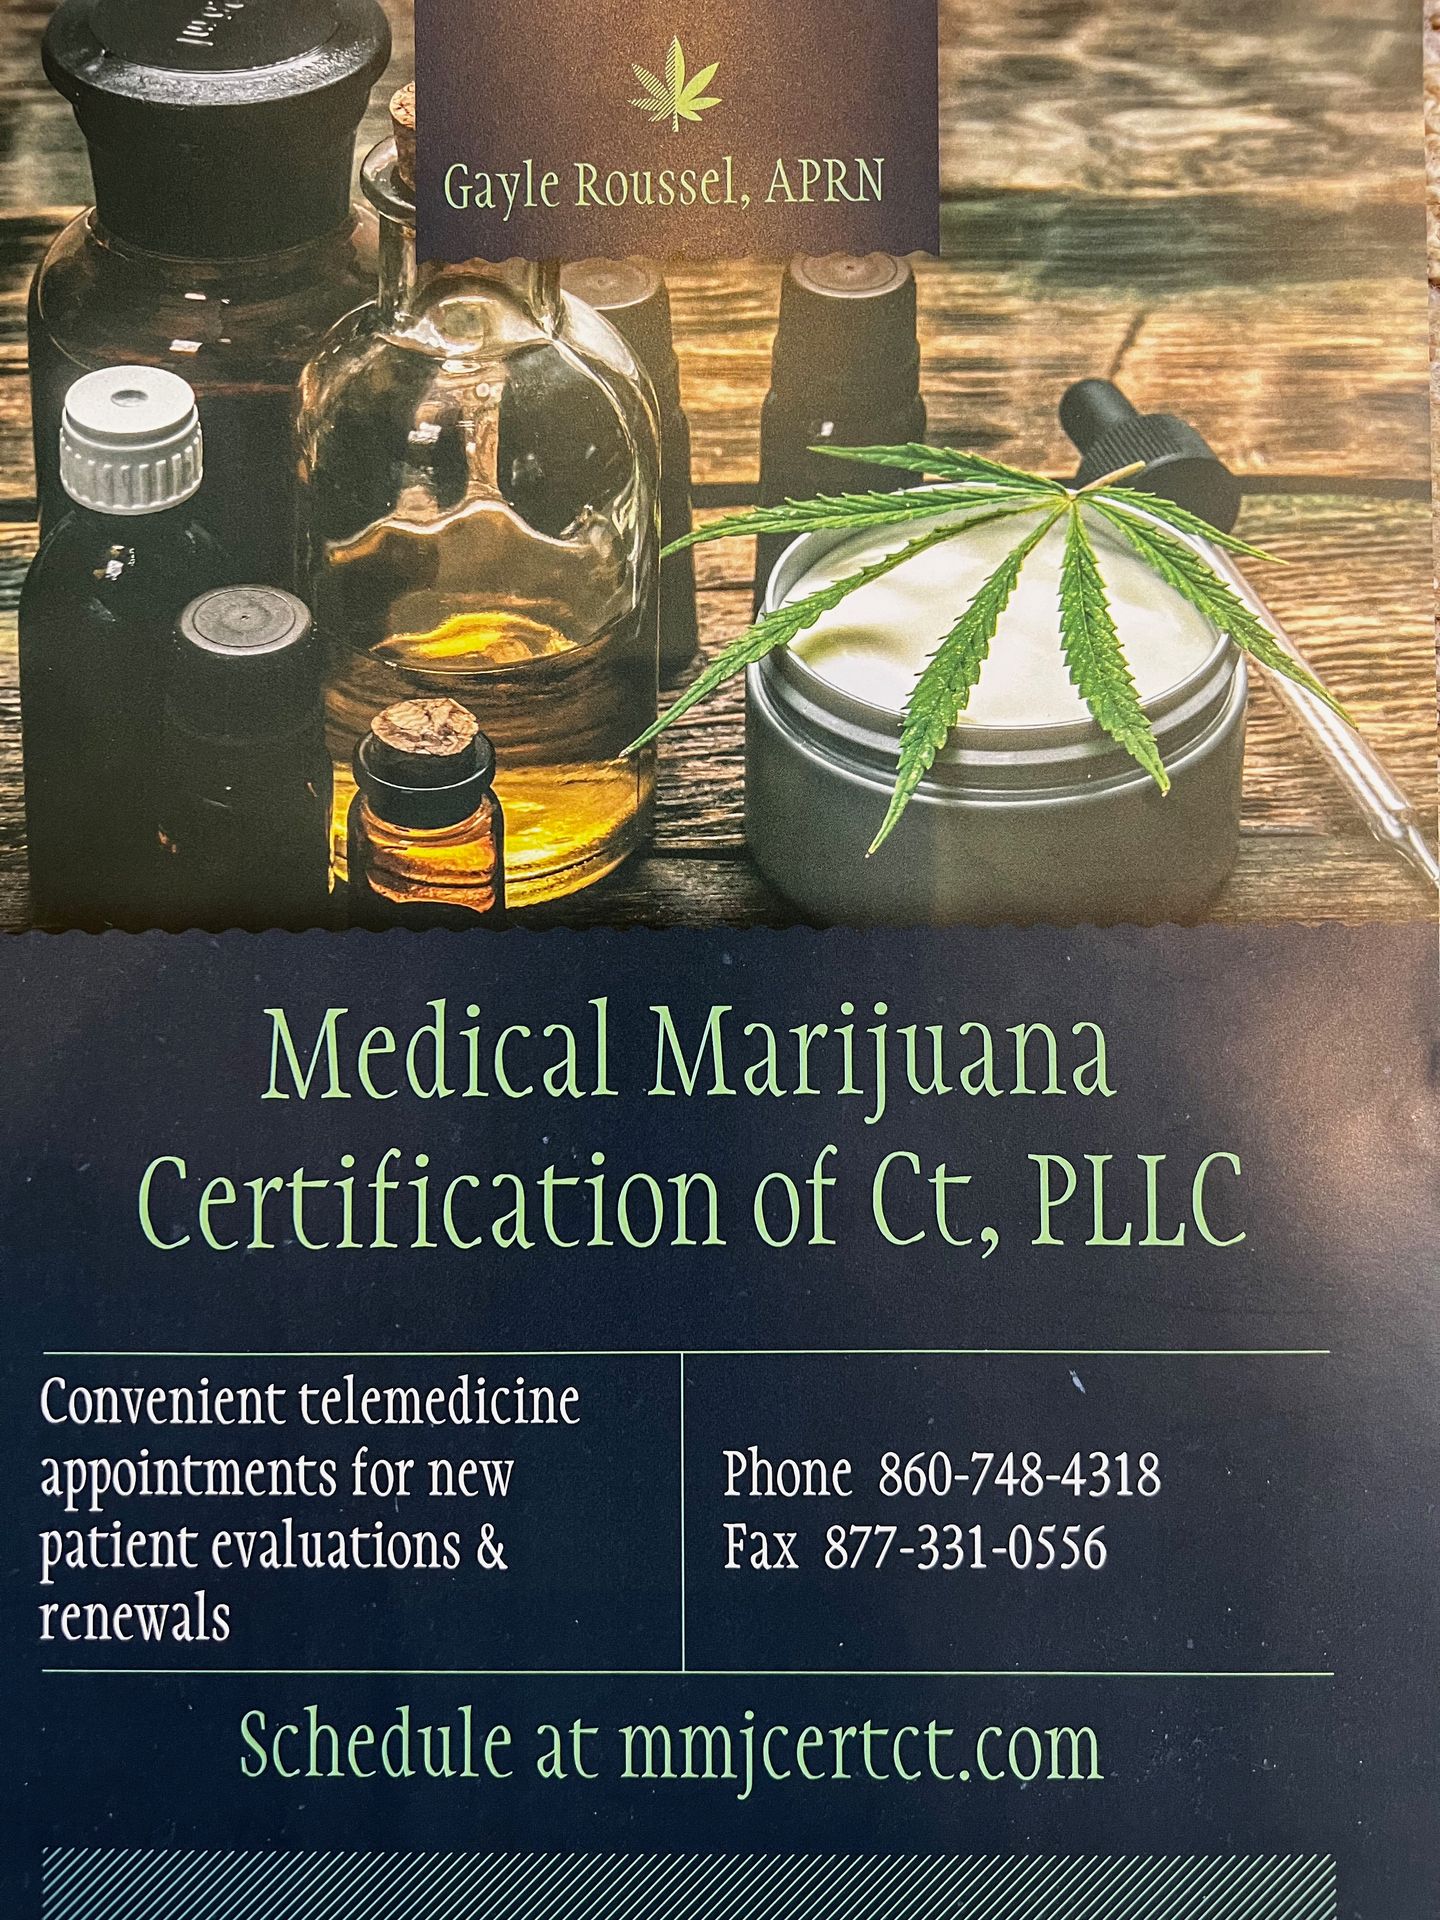 image feature Medical Marijuana Certification of CT